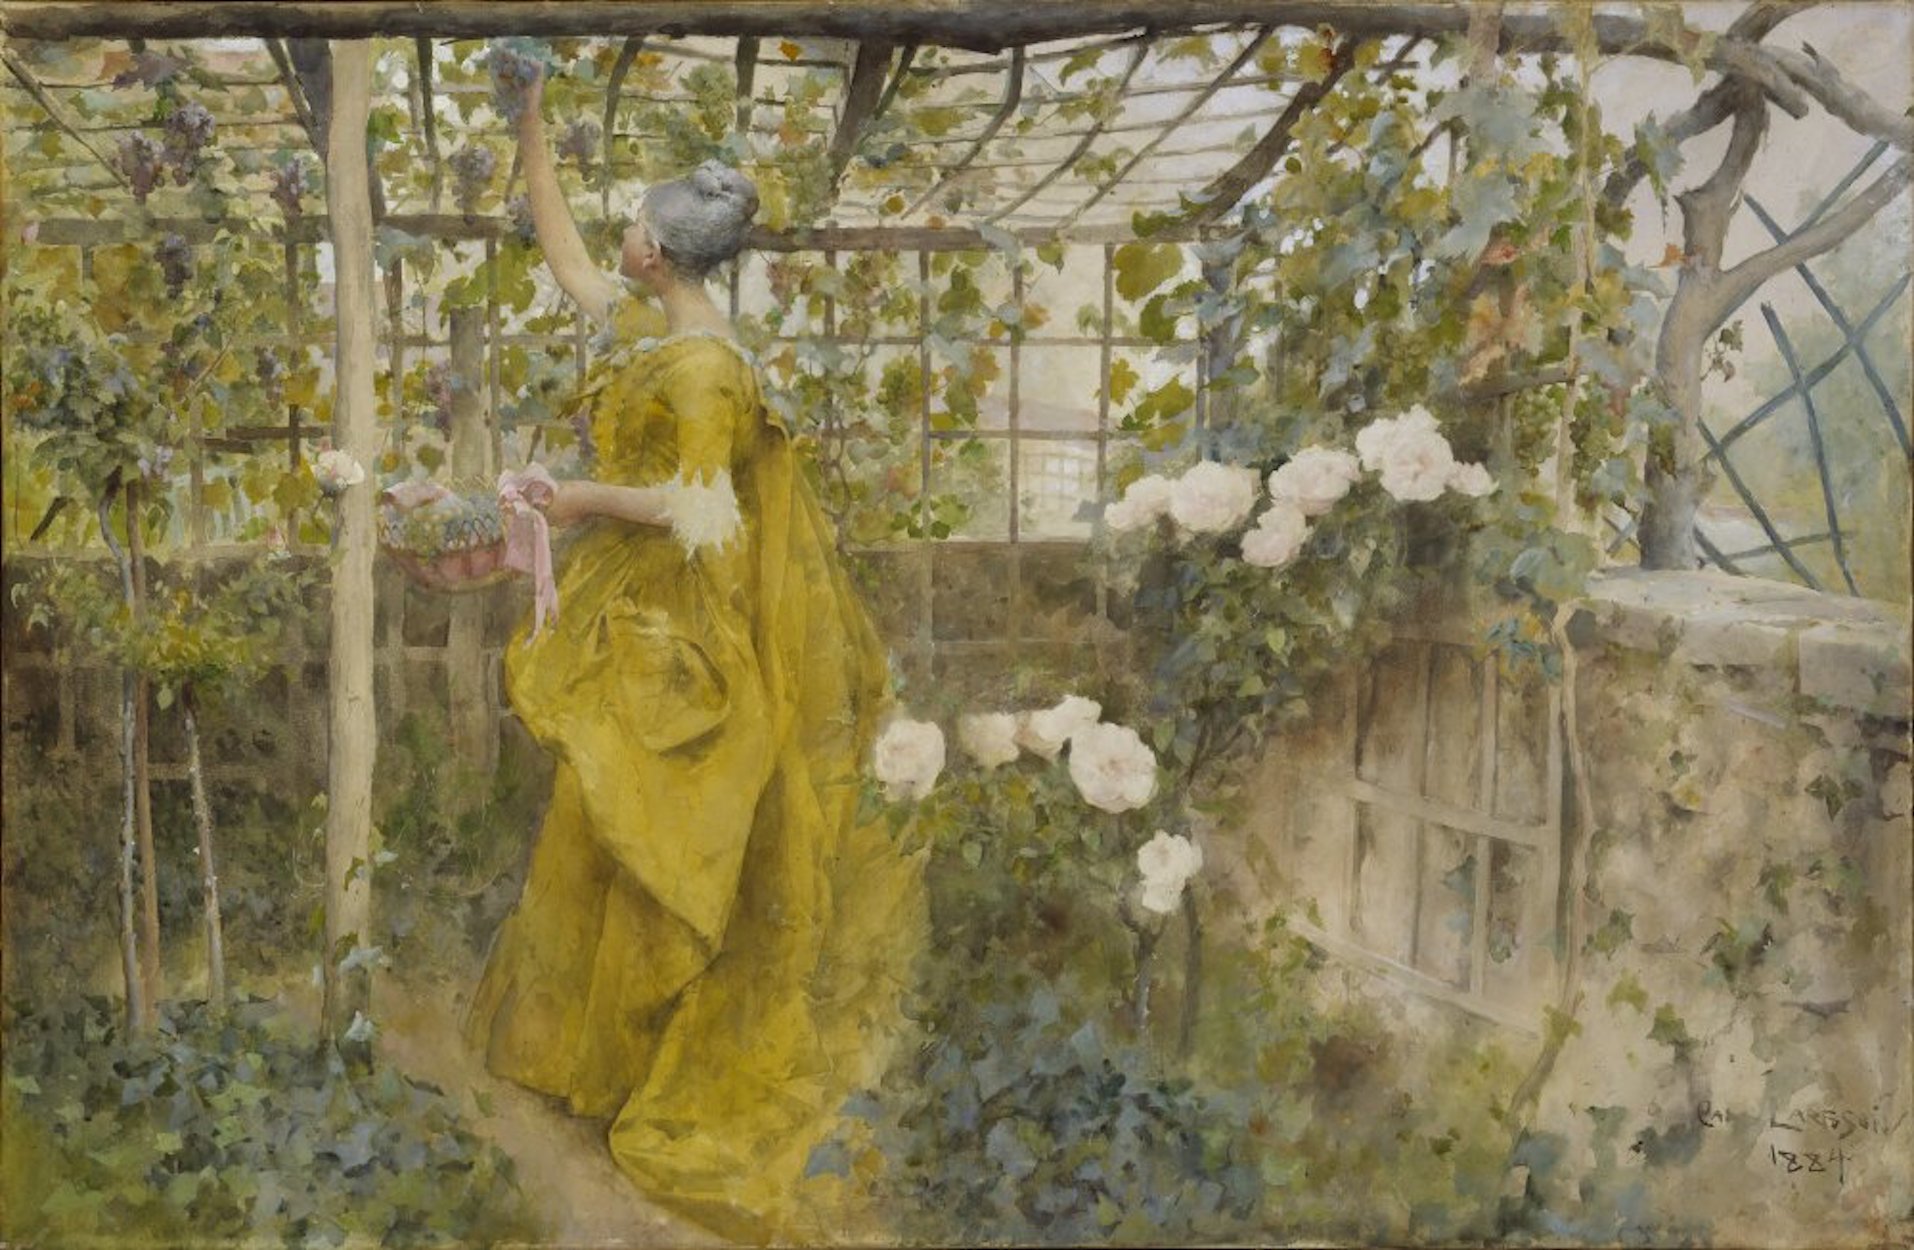 藤蔓 by Carl Larsson - 1884年 - 60 x 92 cm 